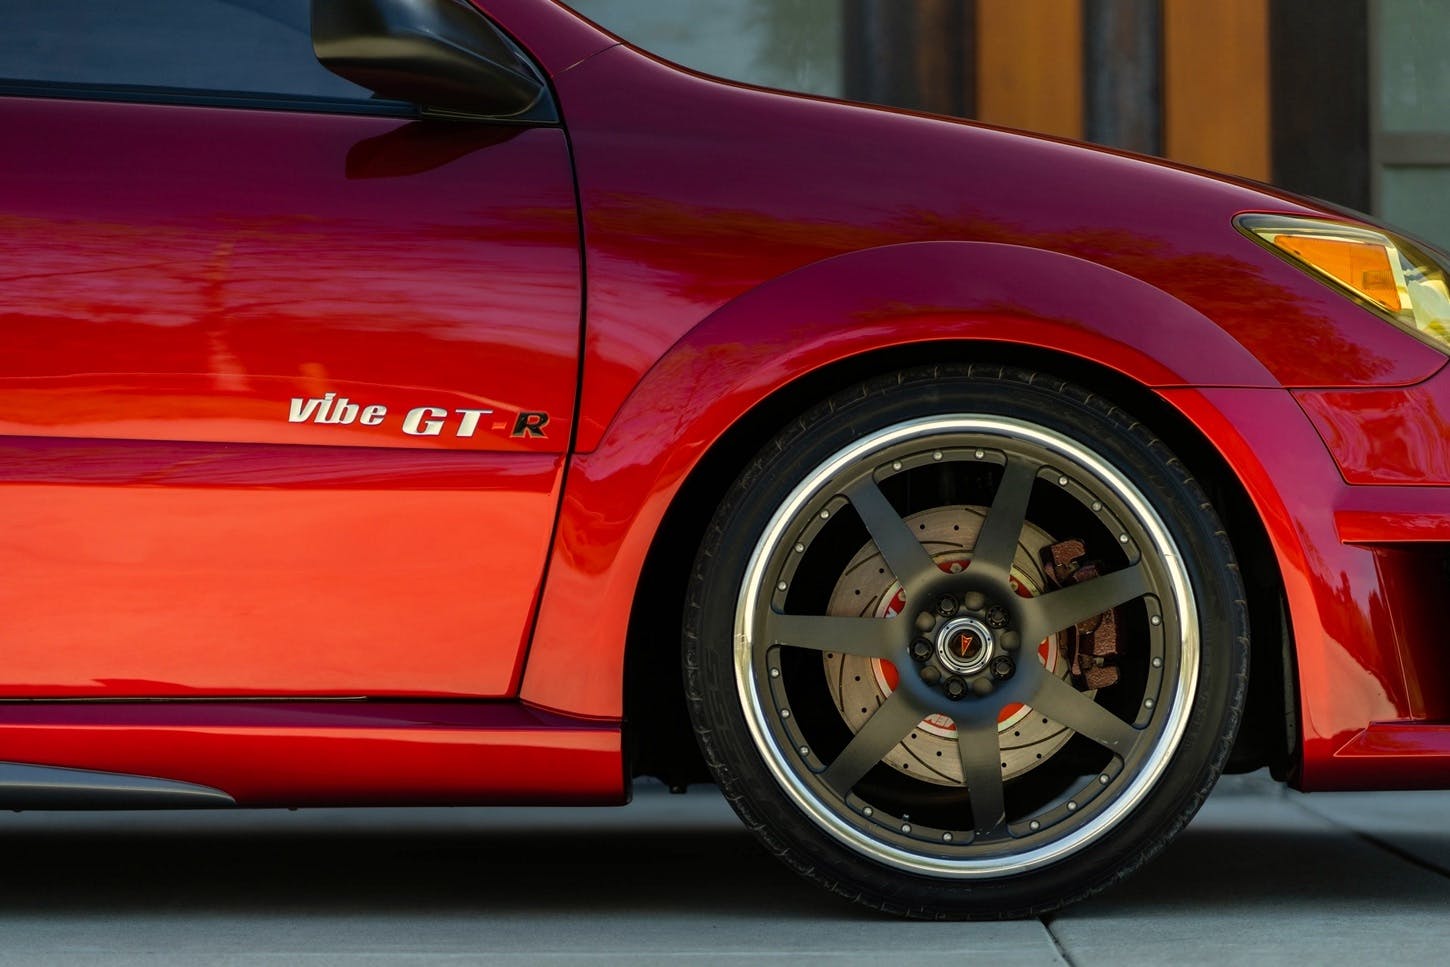 Pontiac Vibe GT-R custom wheel tire